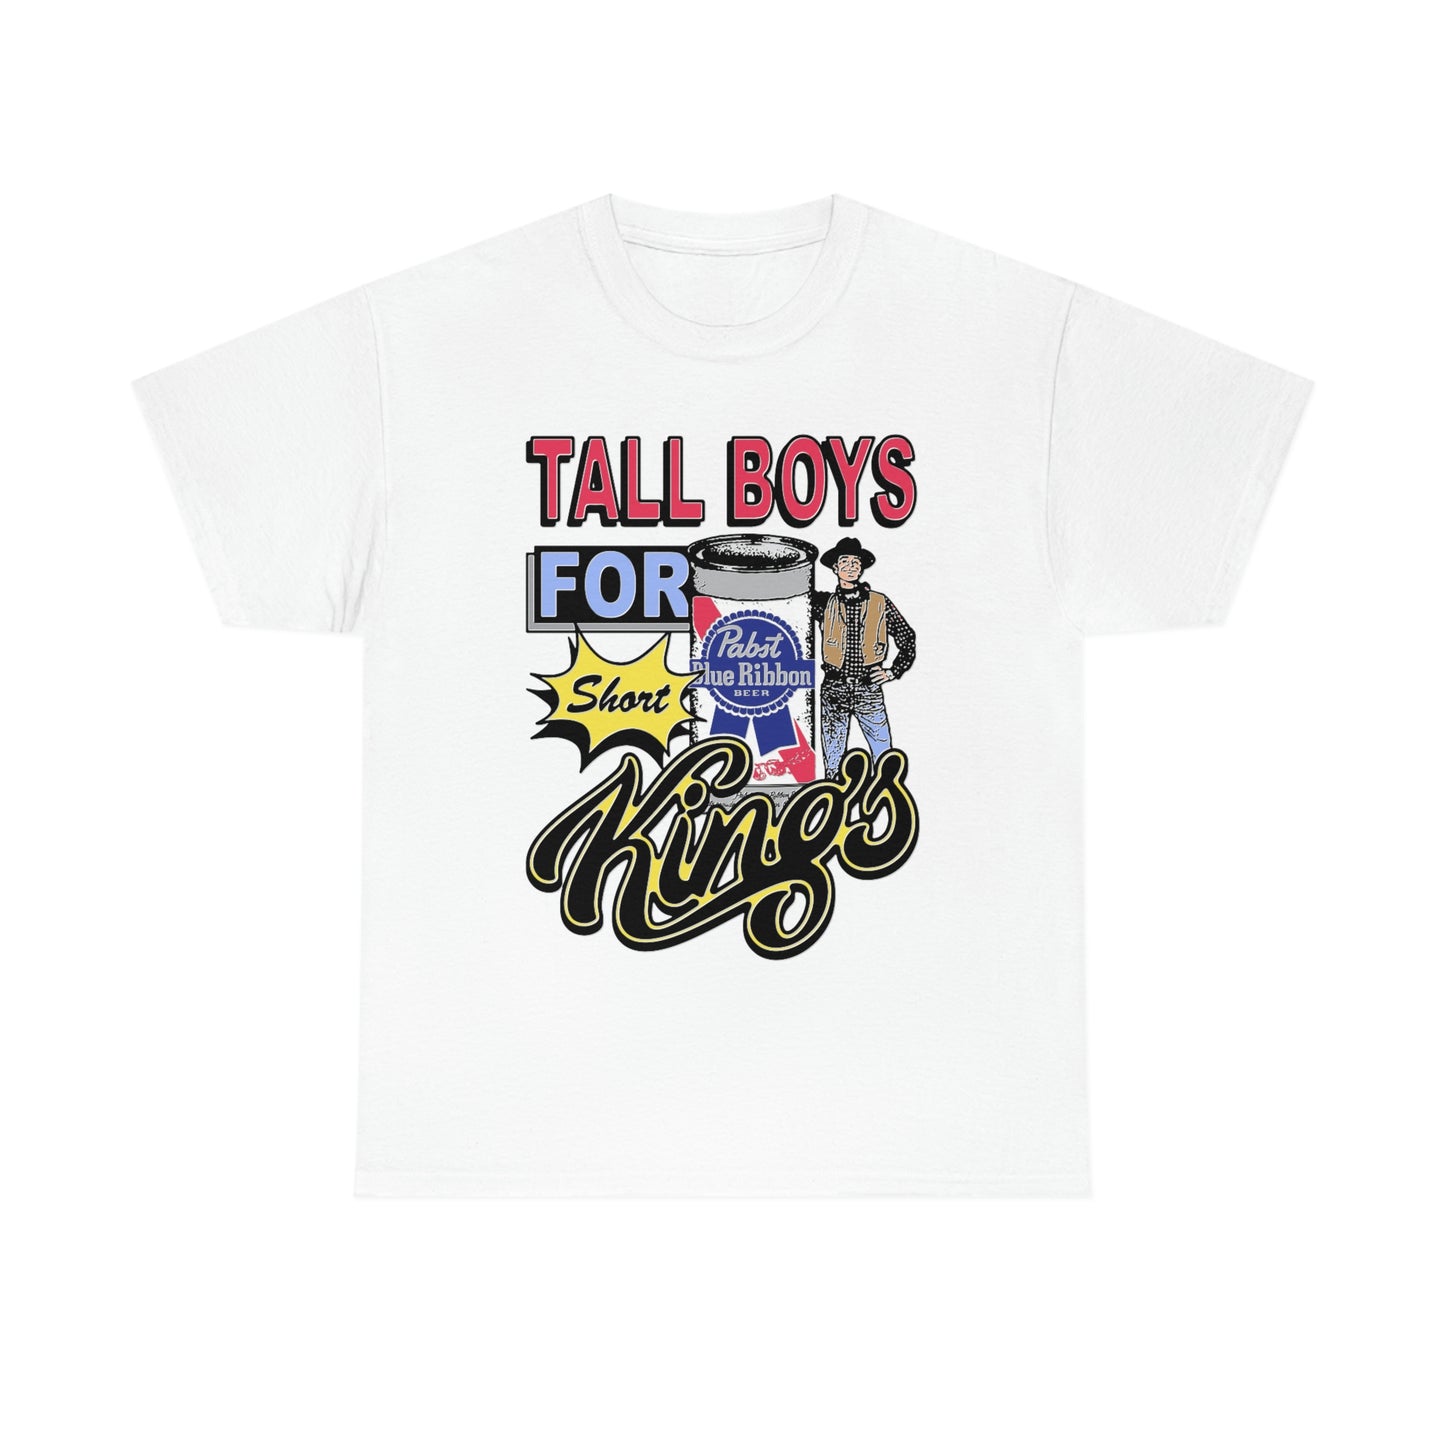 Tall Boys For Short Kings (PBR Edition).